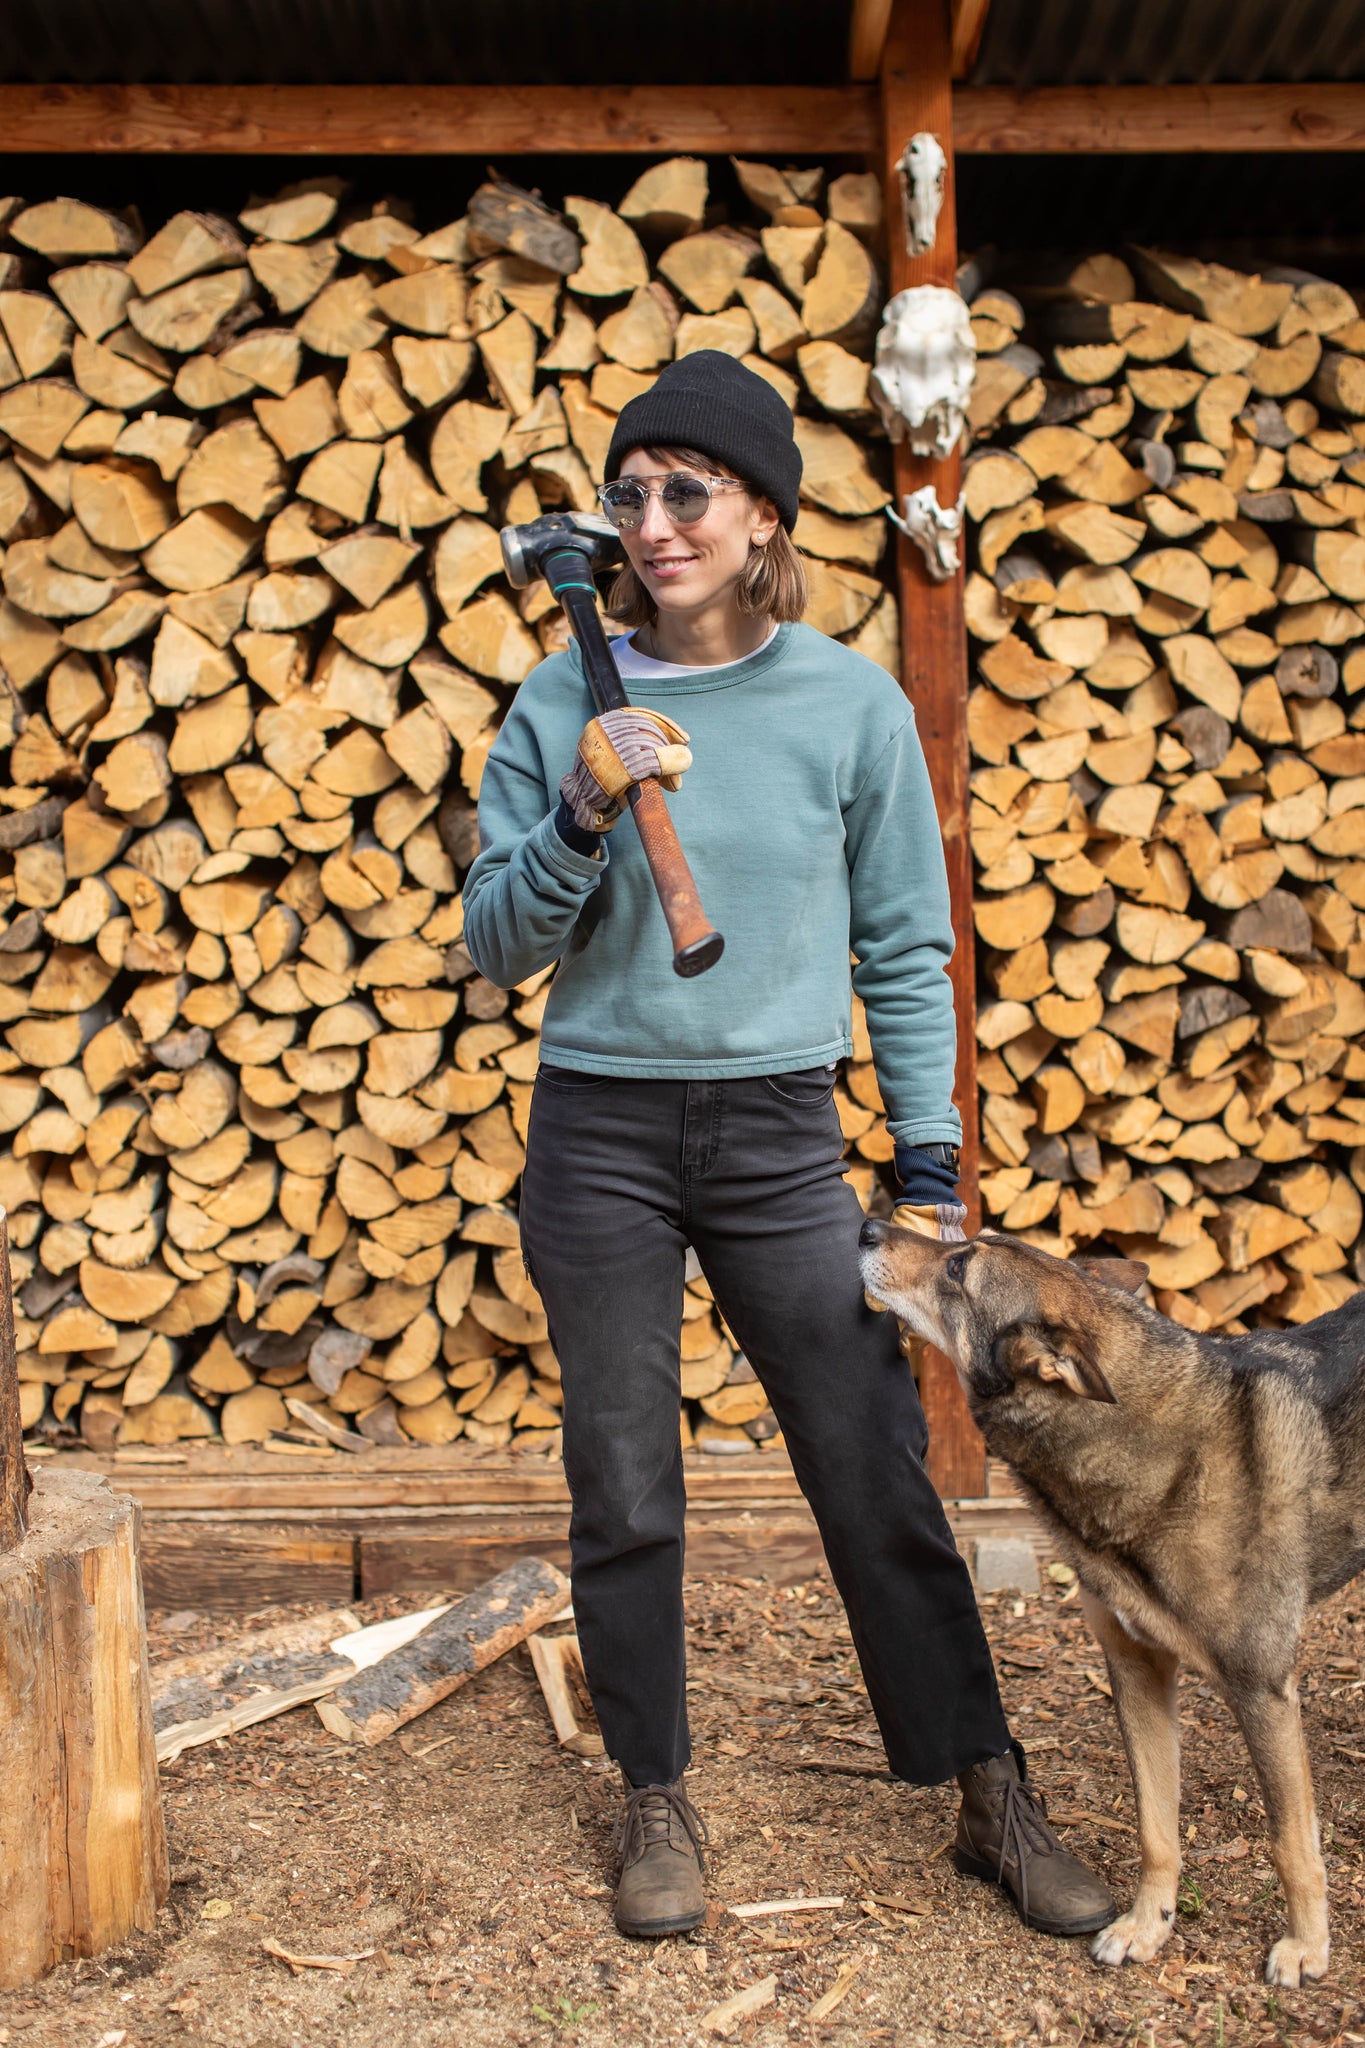 Daphne chopping wood